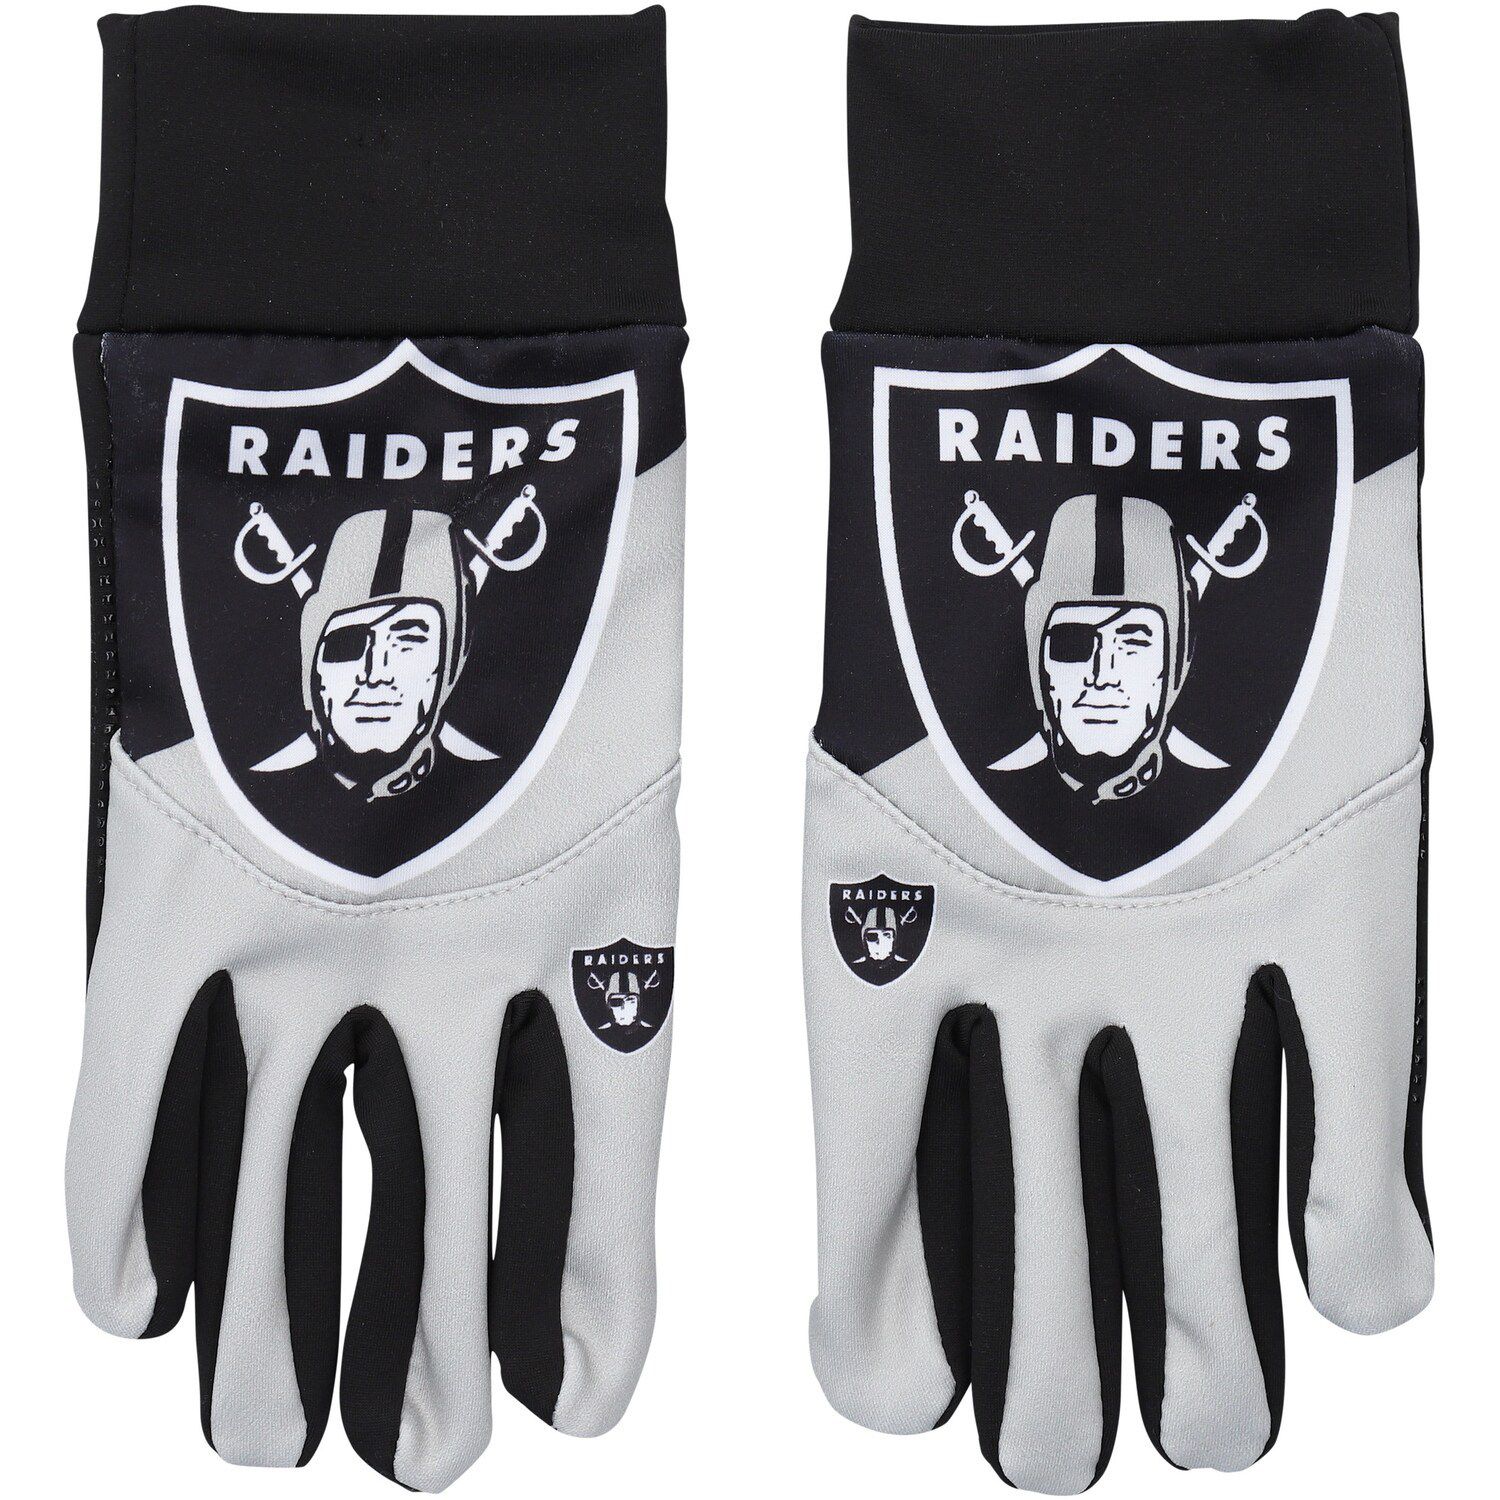 Franklin Las Vegas Raiders Youth NFL Football Receiver Gloves